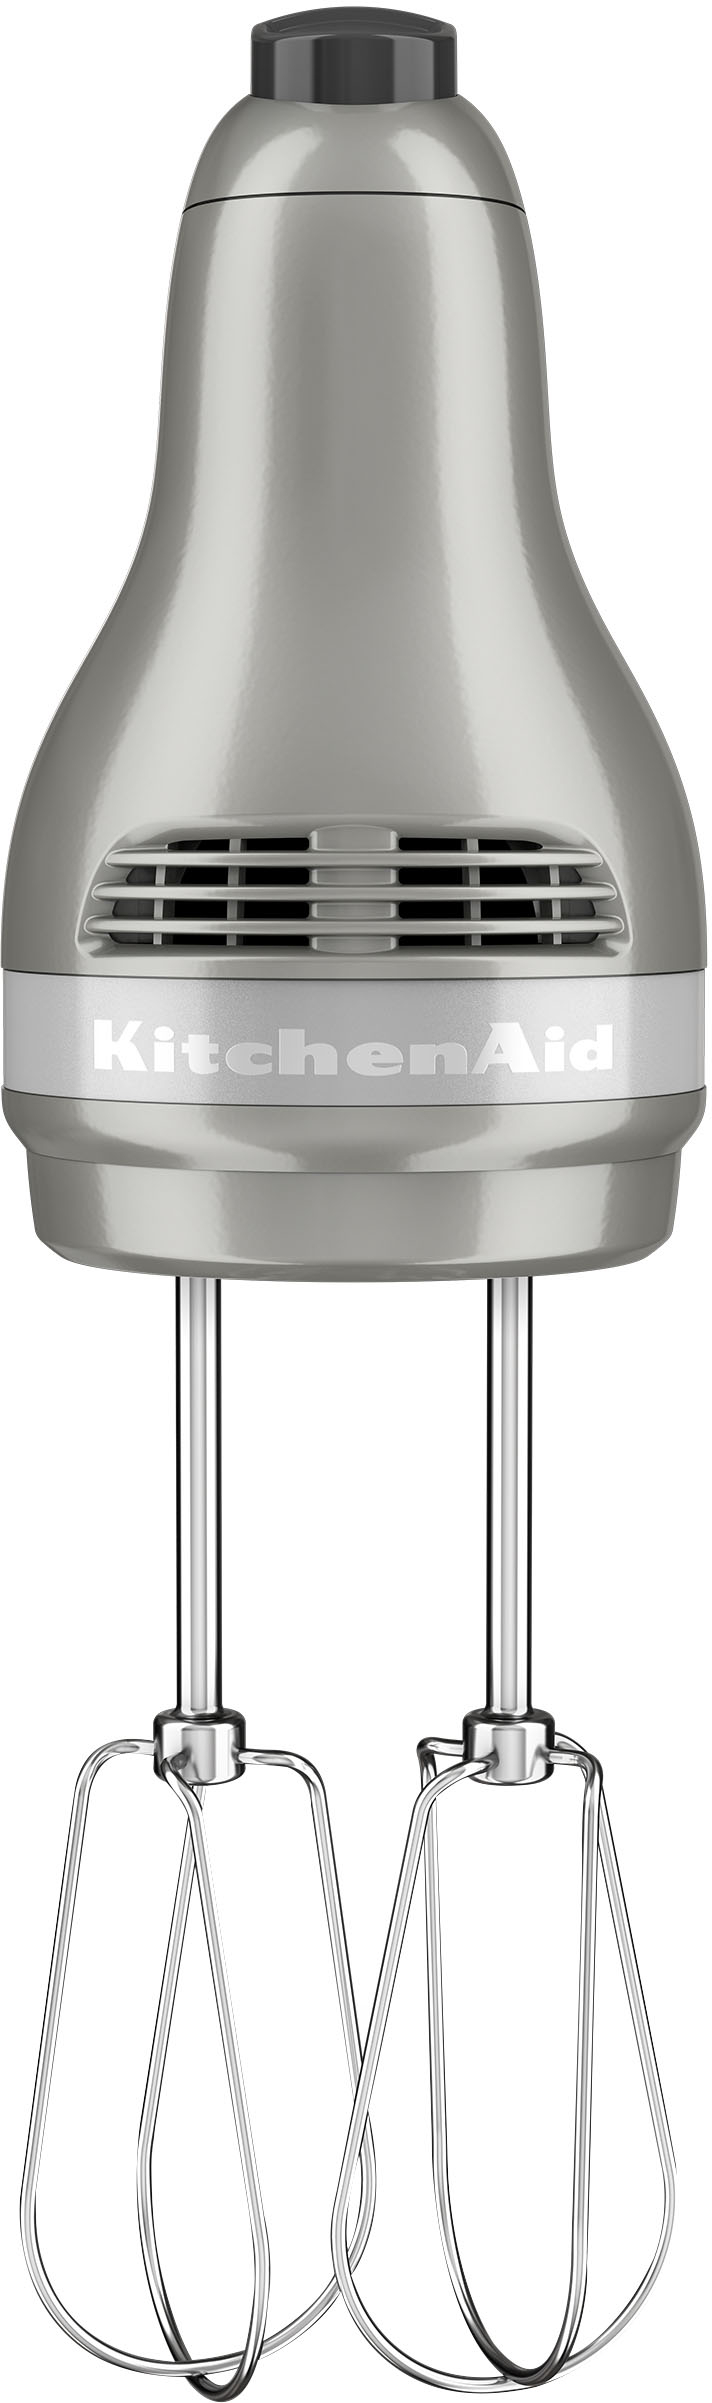 KitchenAid 5-Speed Ultra Power Hand Mixer, Black - Shop Blenders